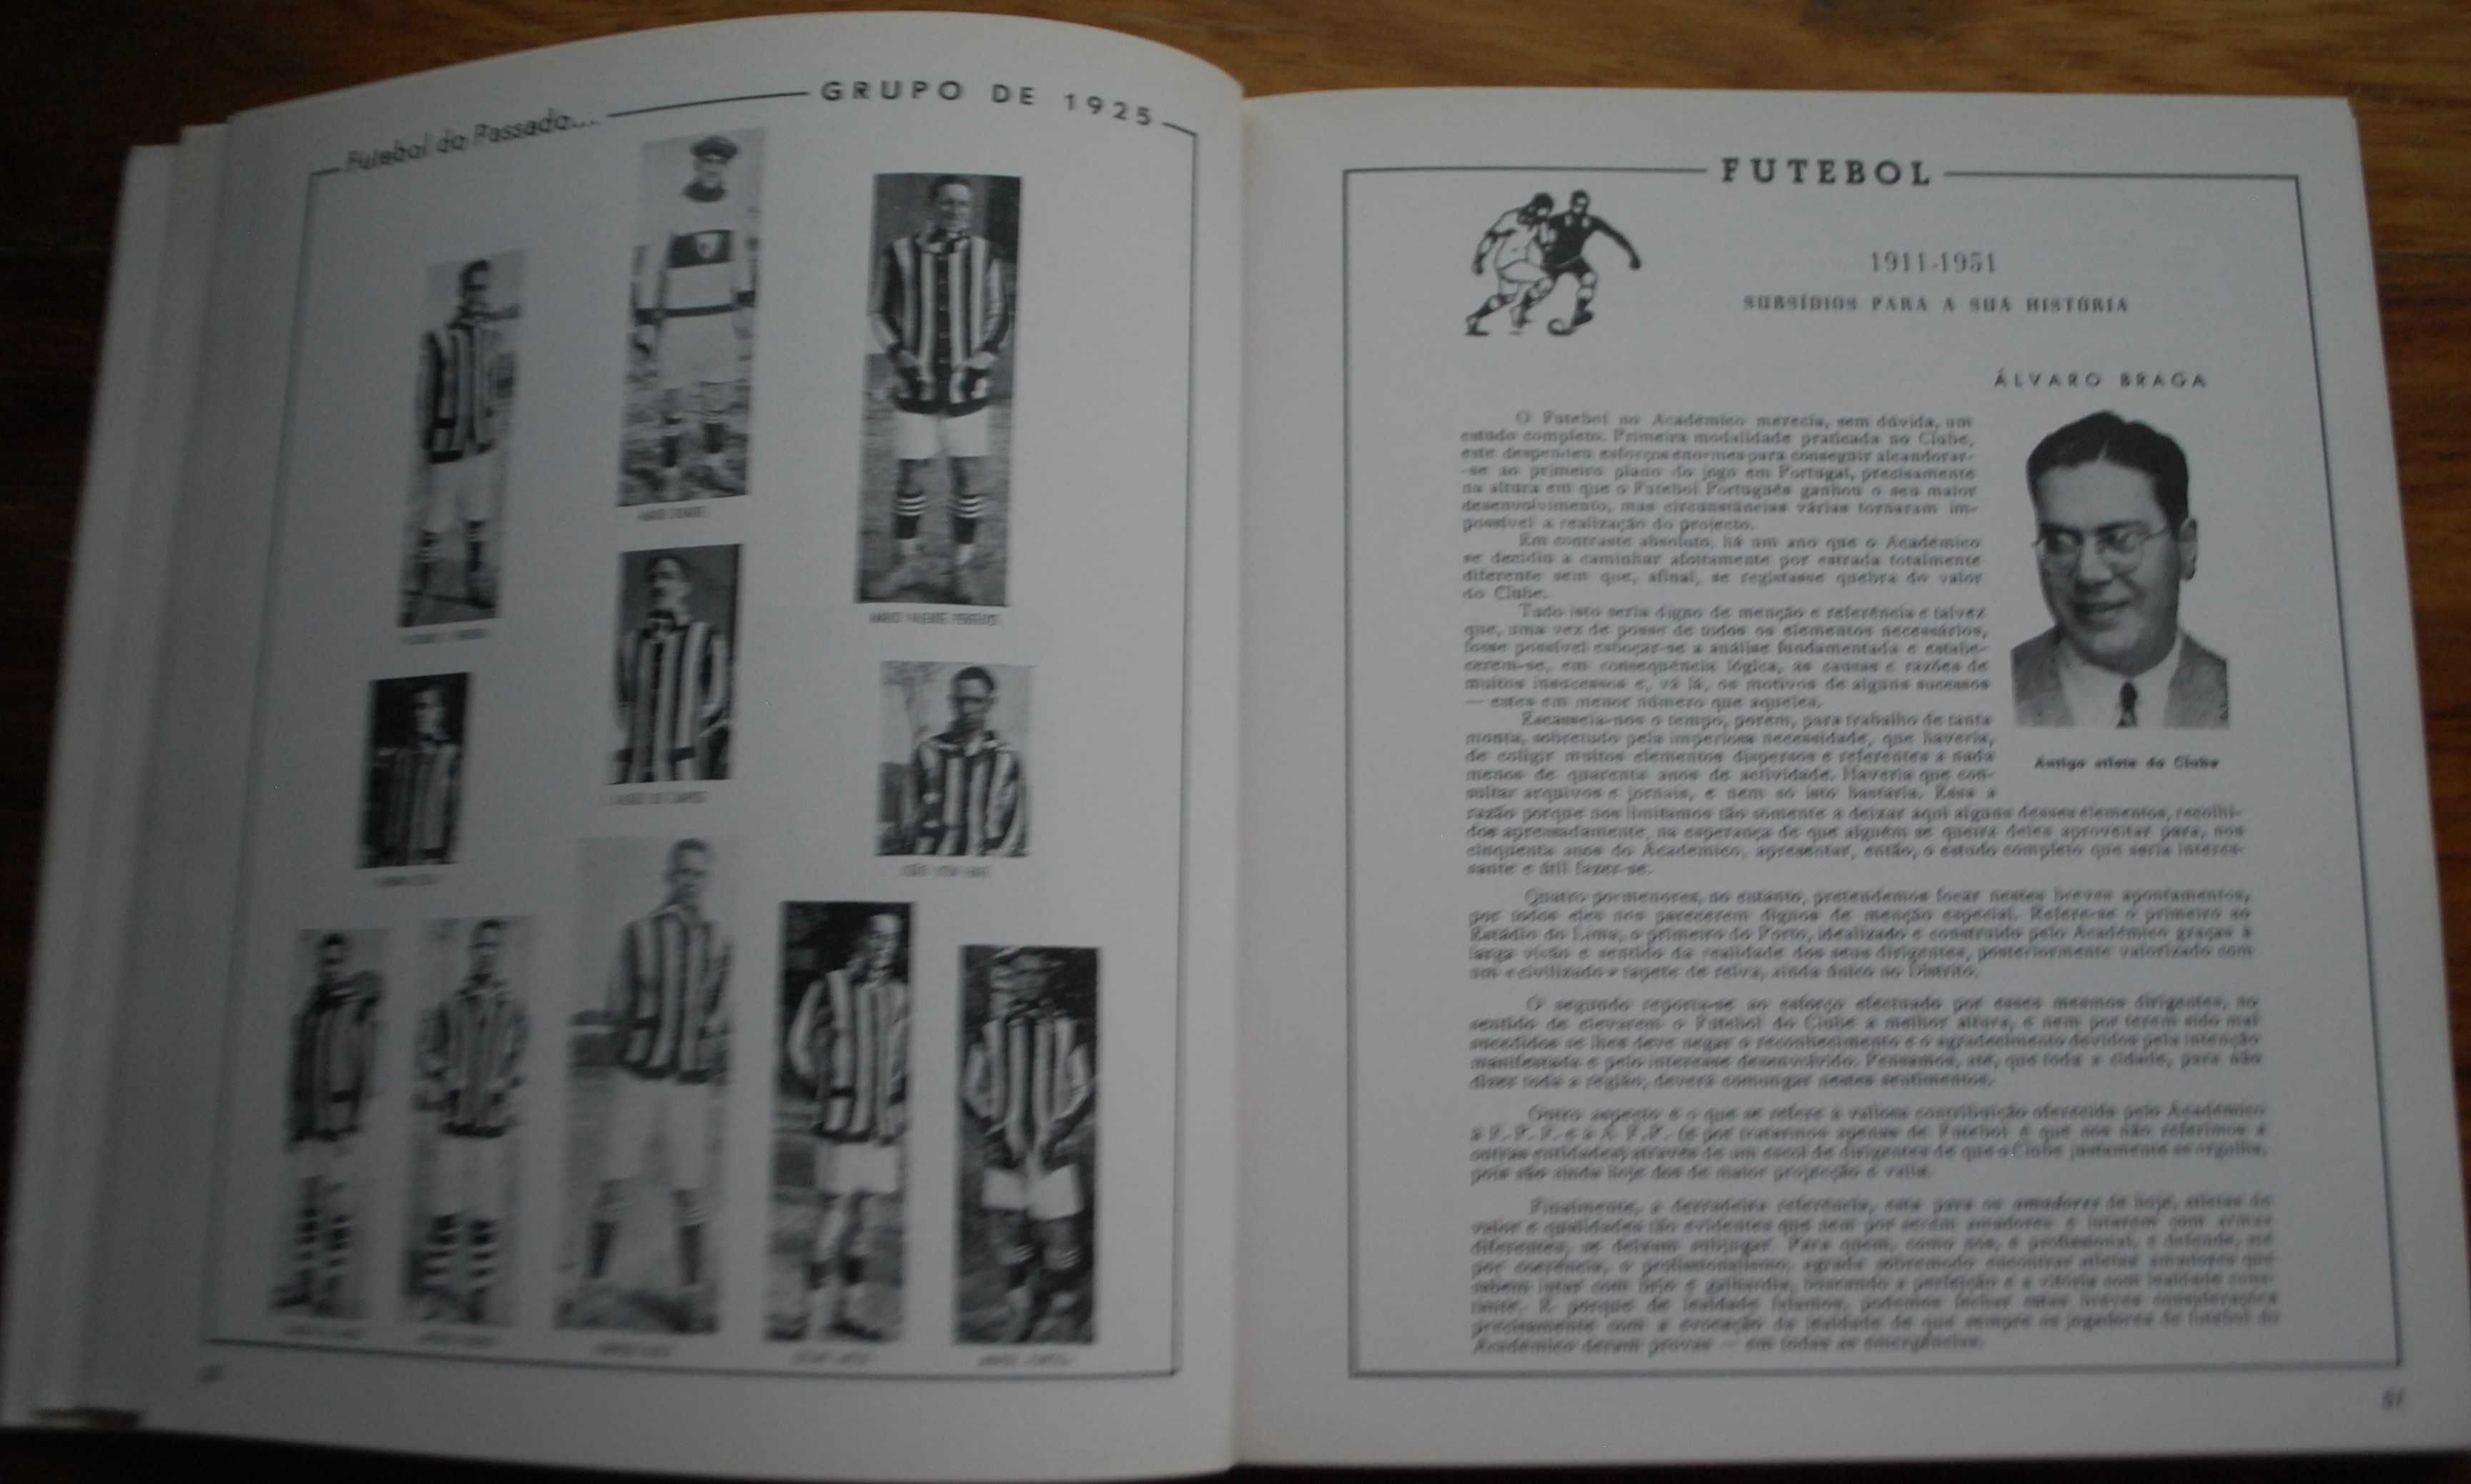 Académico Futebol Clube 75 anos (1911 / 1986)